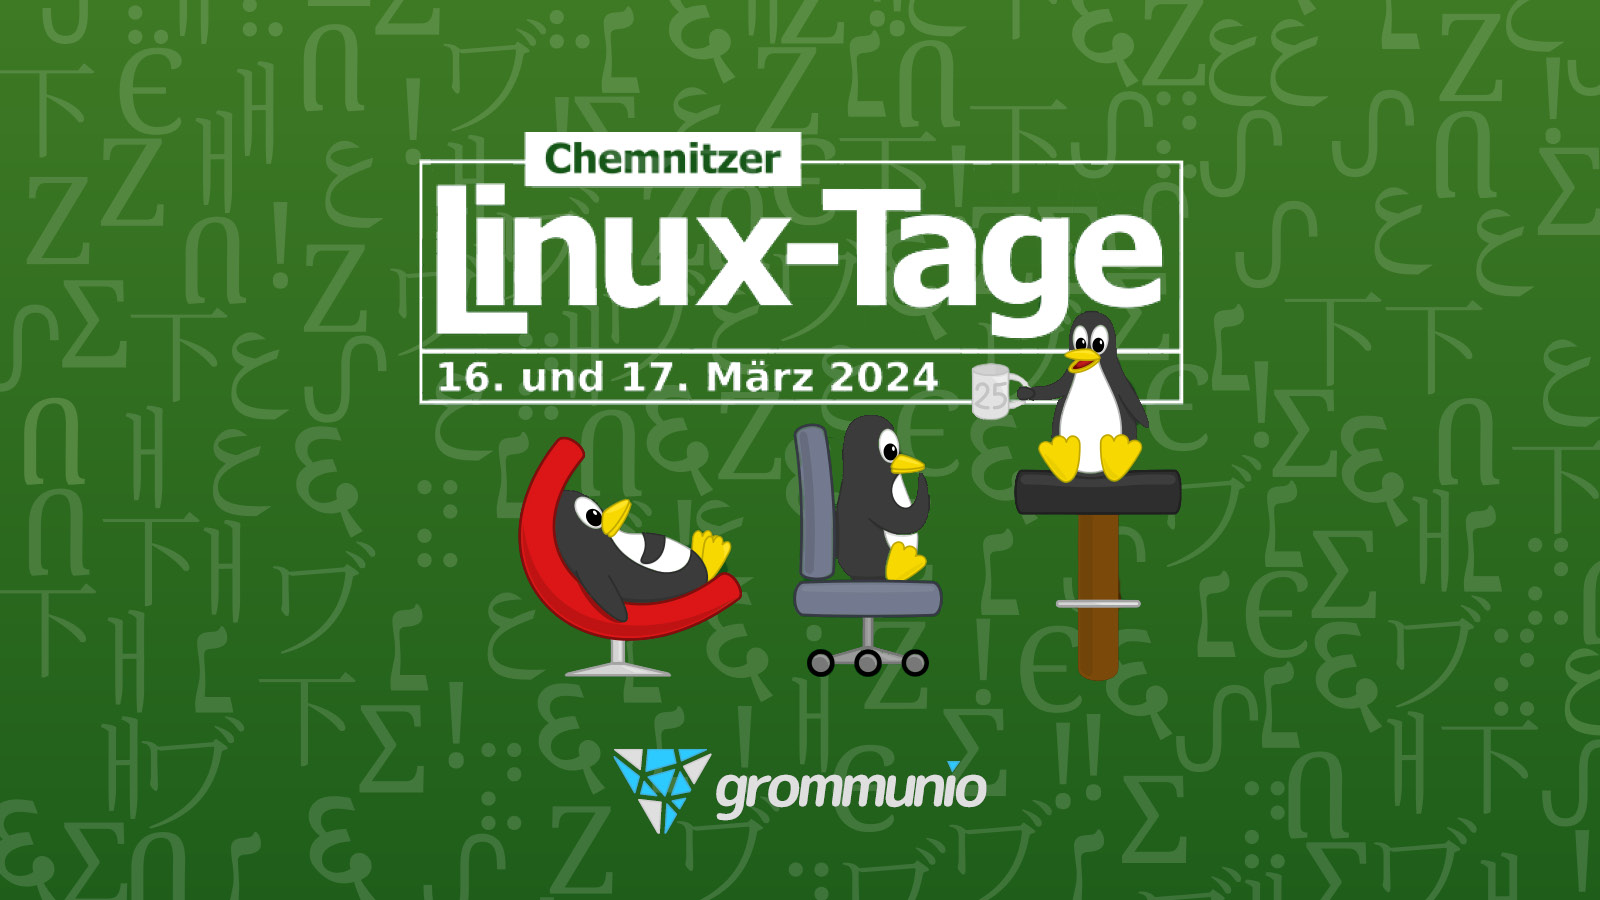 grommunio at the 25th Chemnitzer Linux-Days